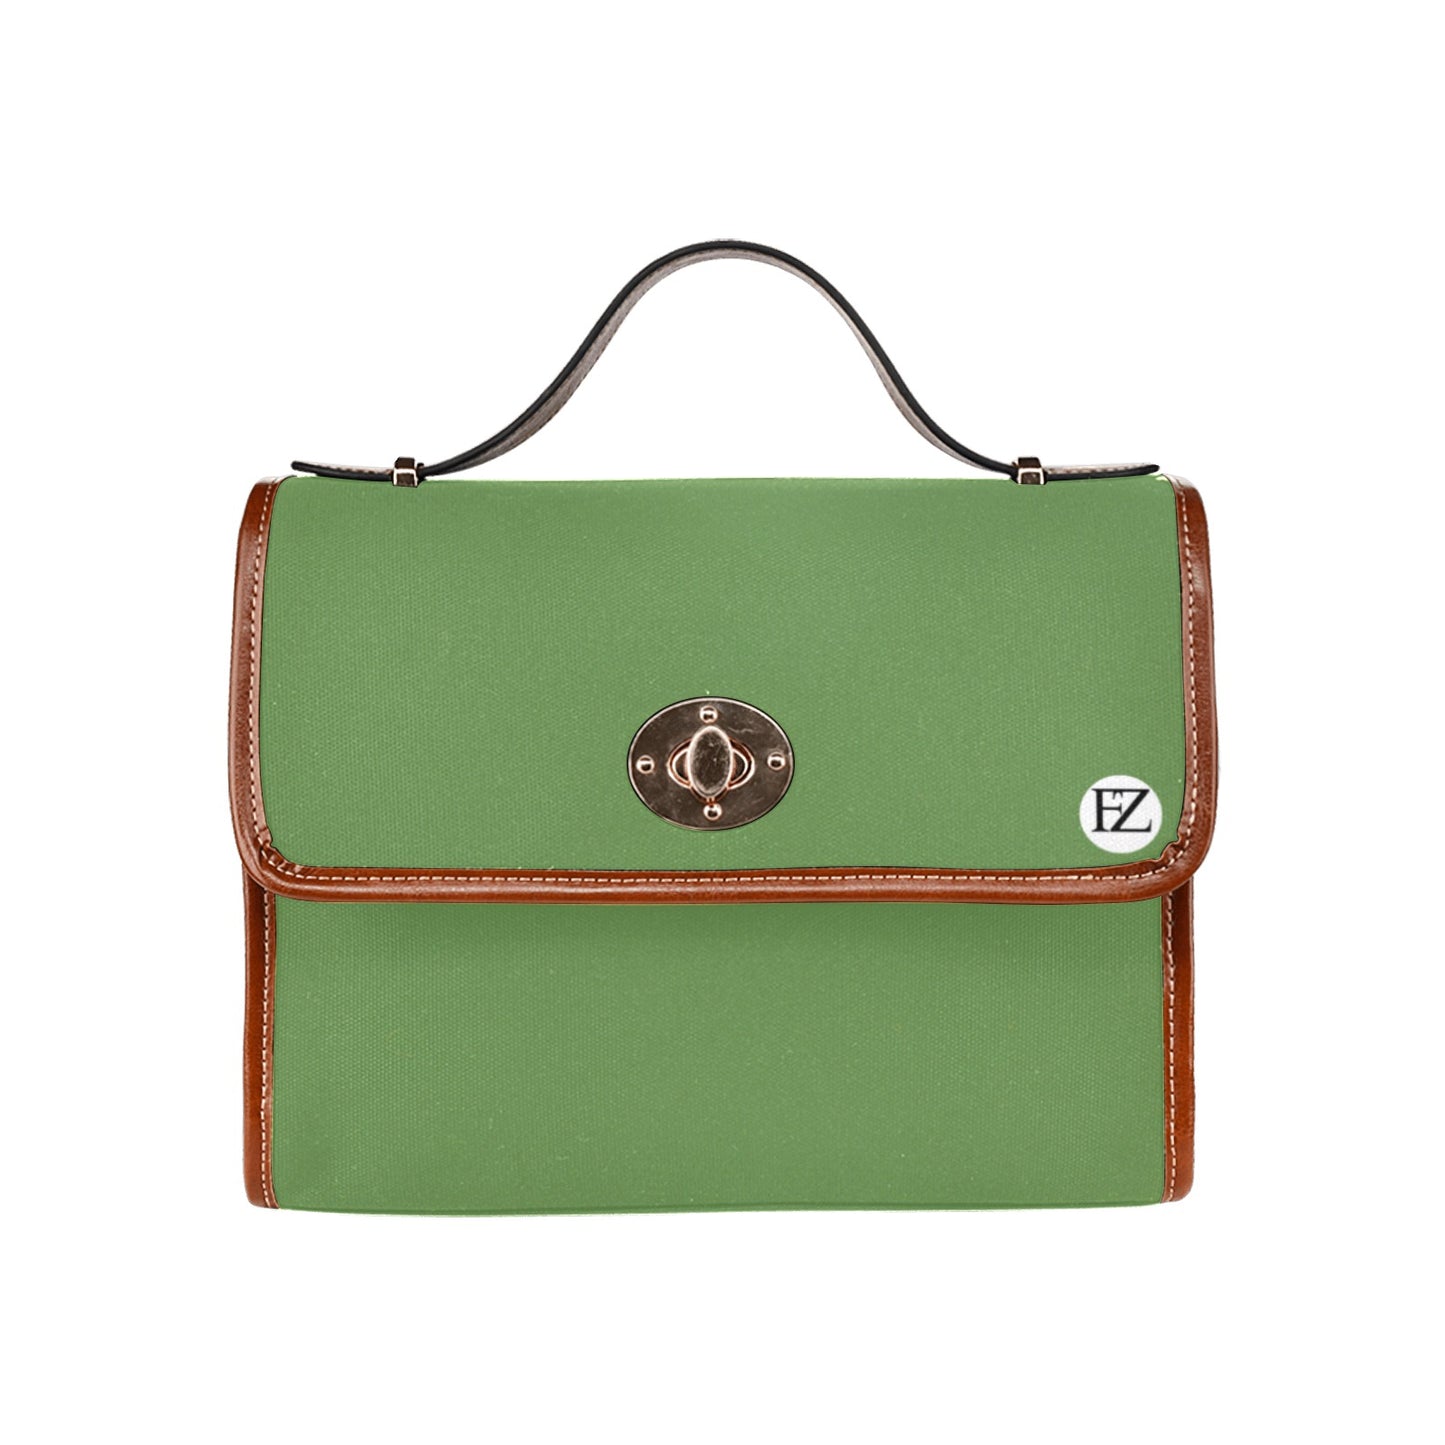 fz original handbag one size / fz - green all over print waterproof canvas bag(model1641)(brown strap)